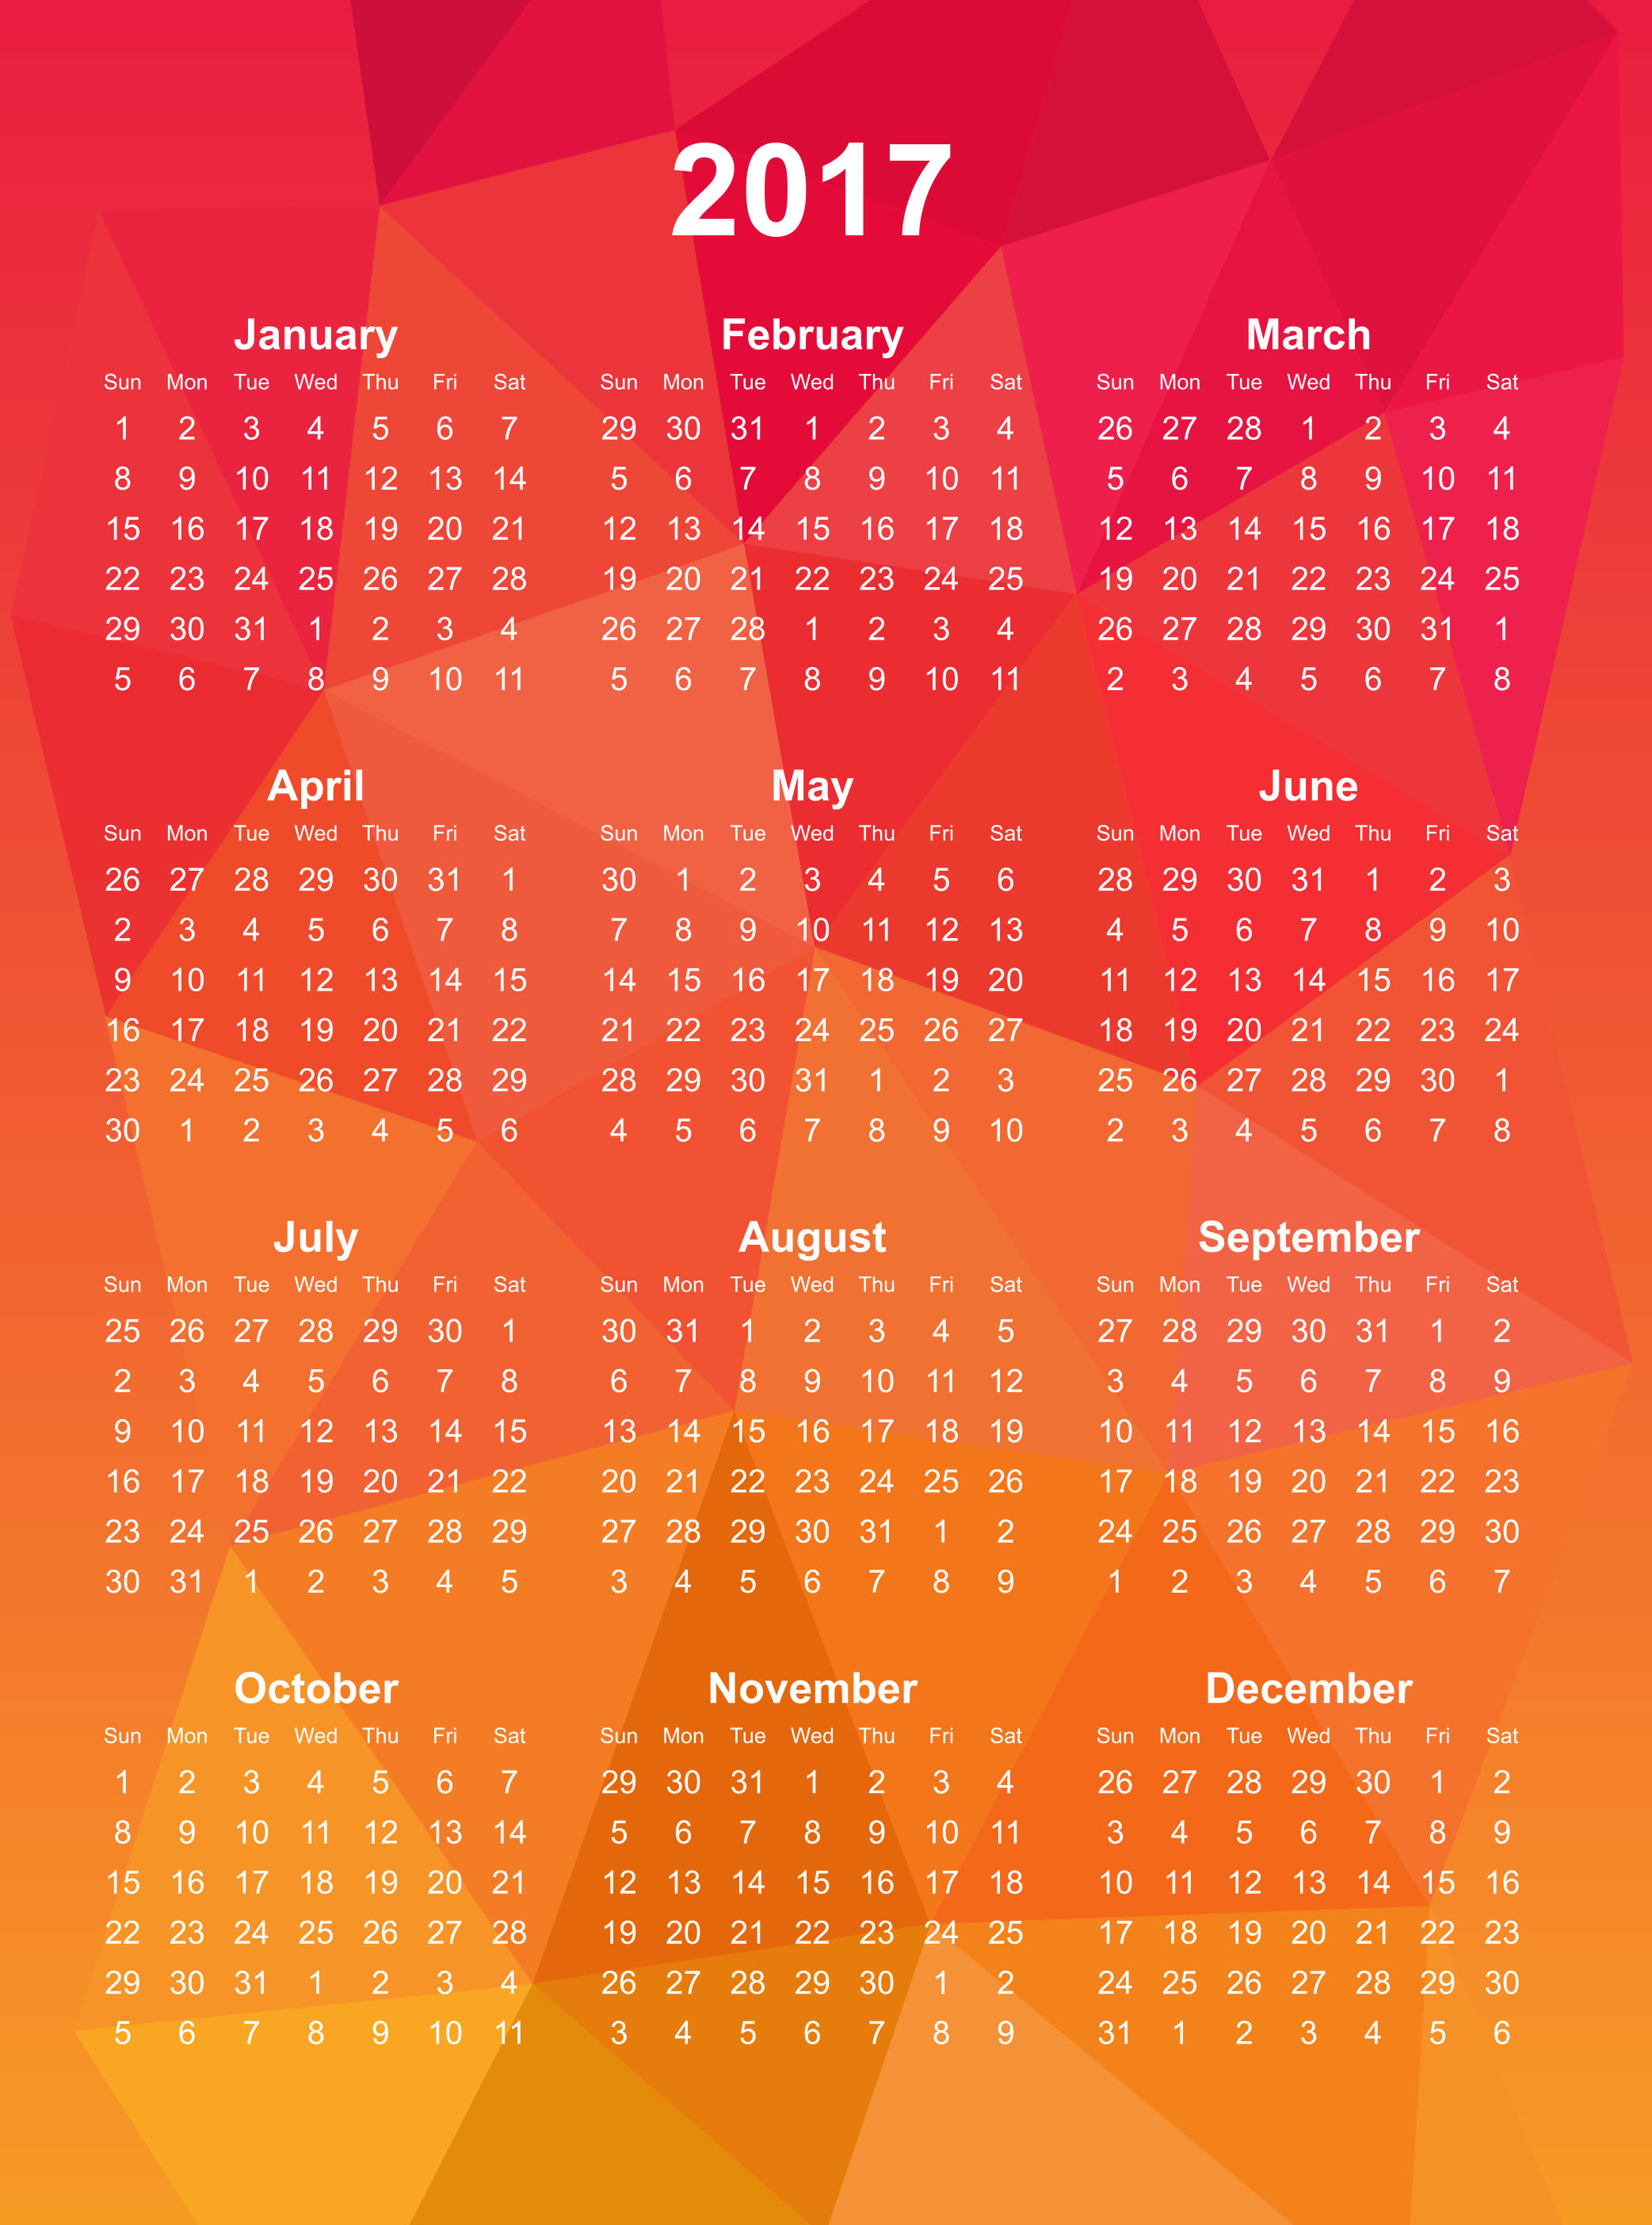 download-free-desktop-calendar-2017